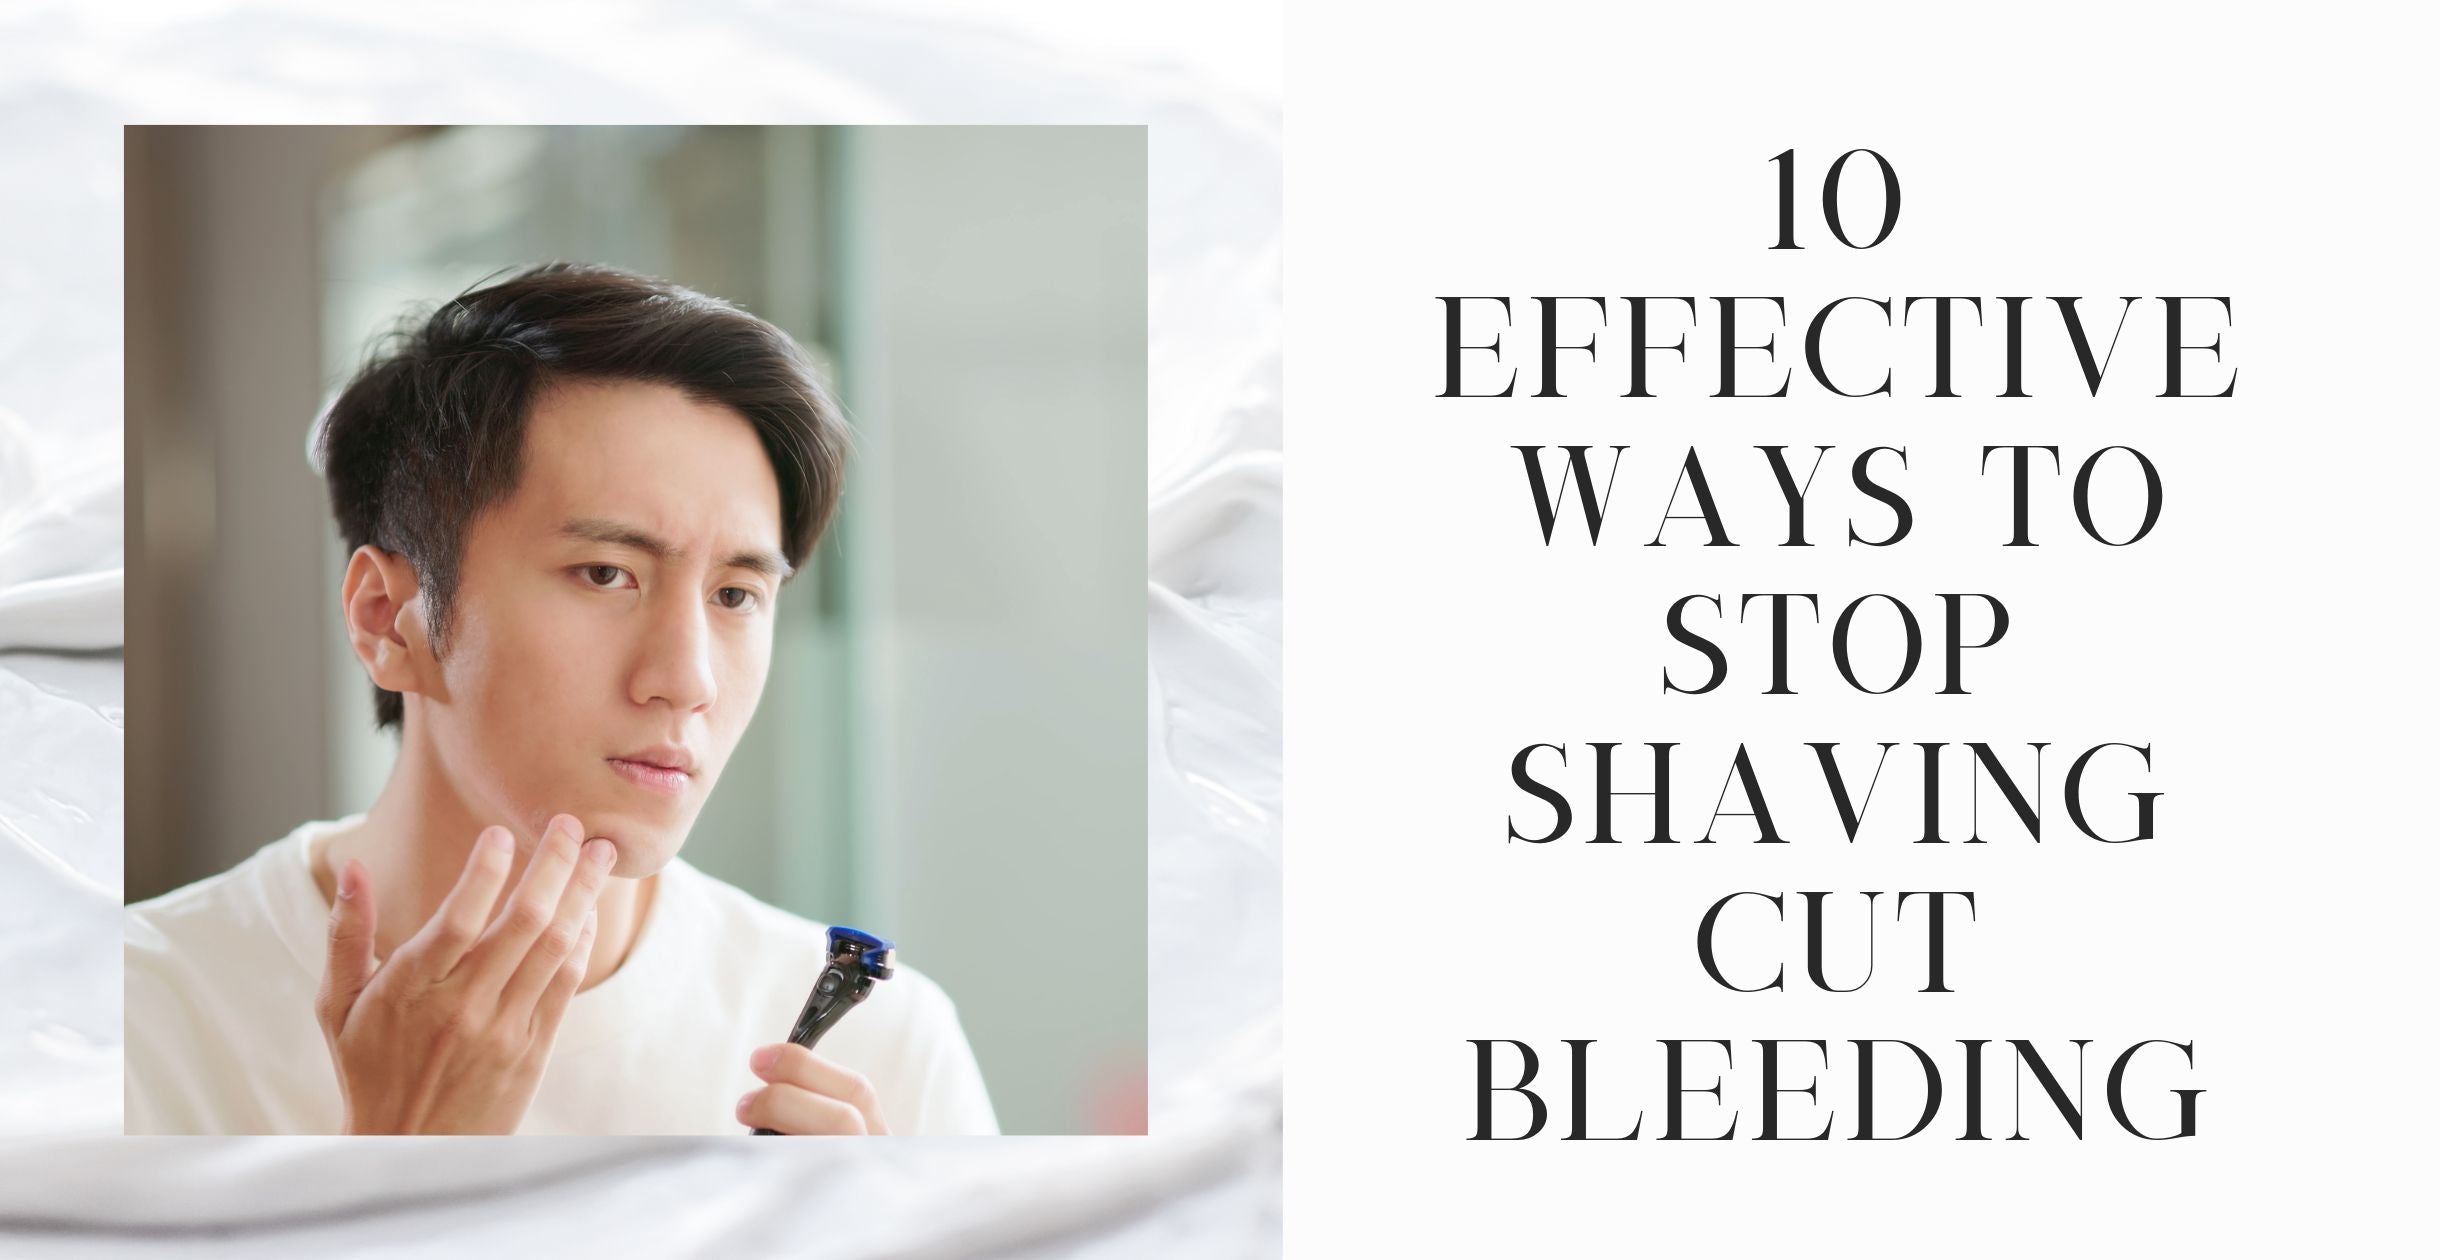 10 Effective Ways to Stop Shaving Cut Bleeding